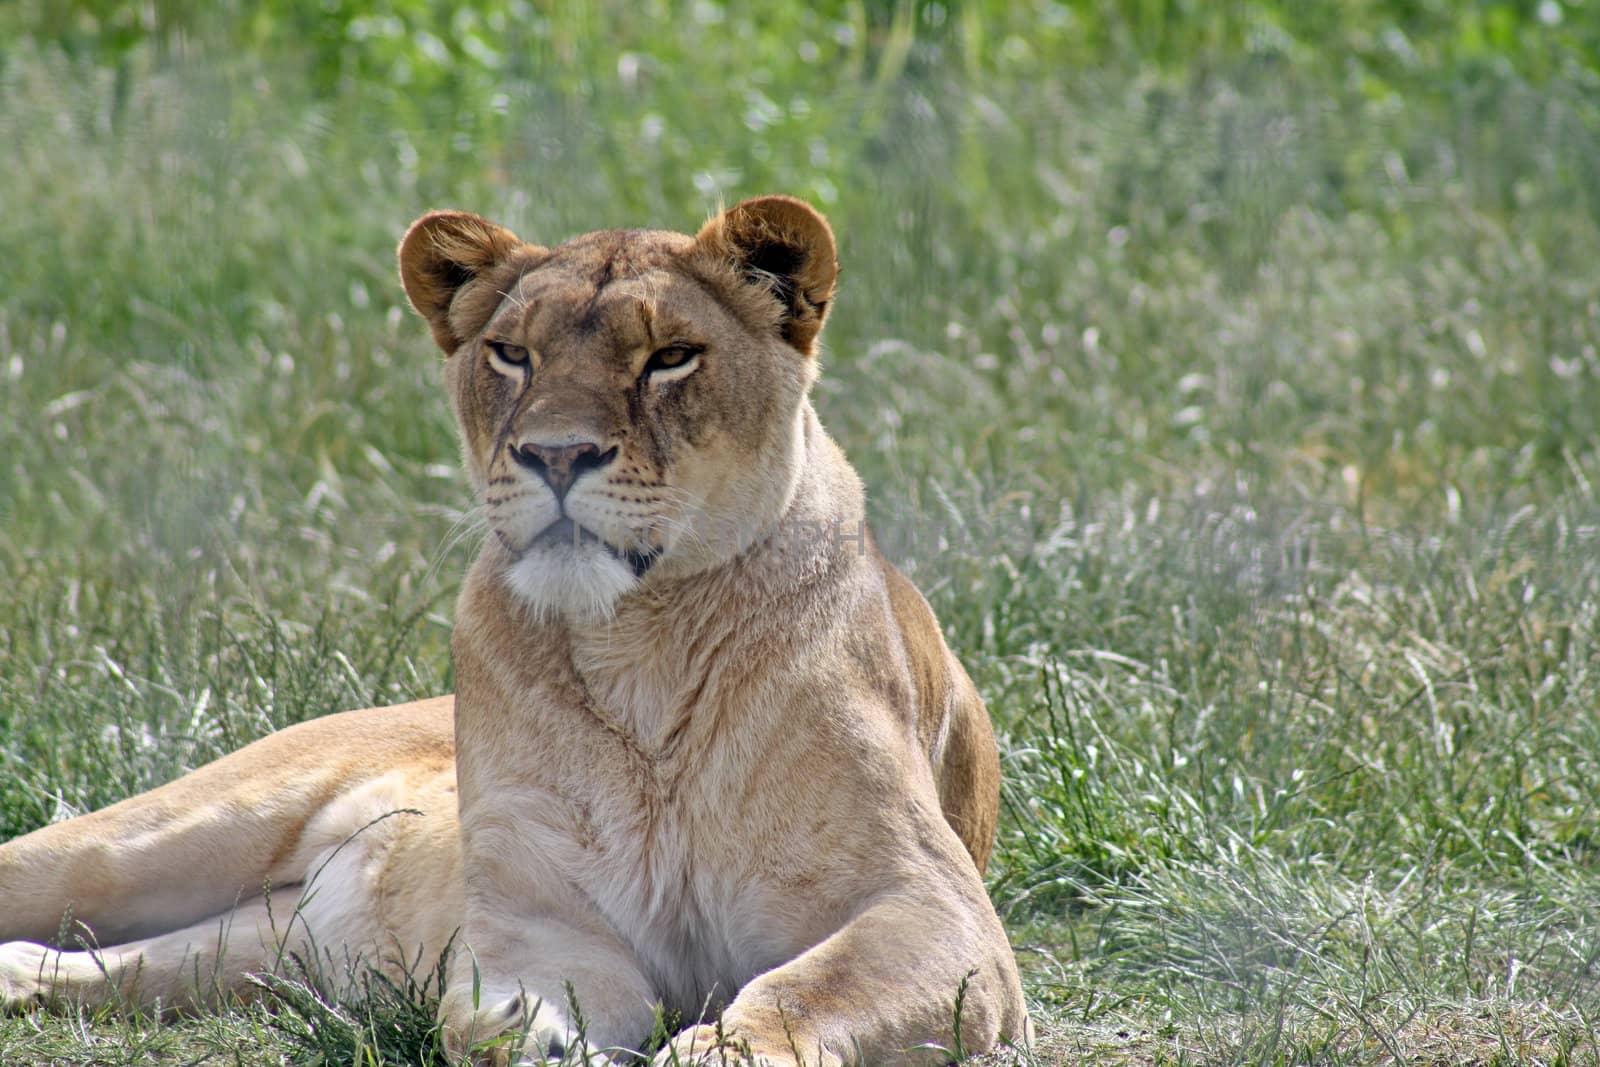 stunning lioness by lizapixels